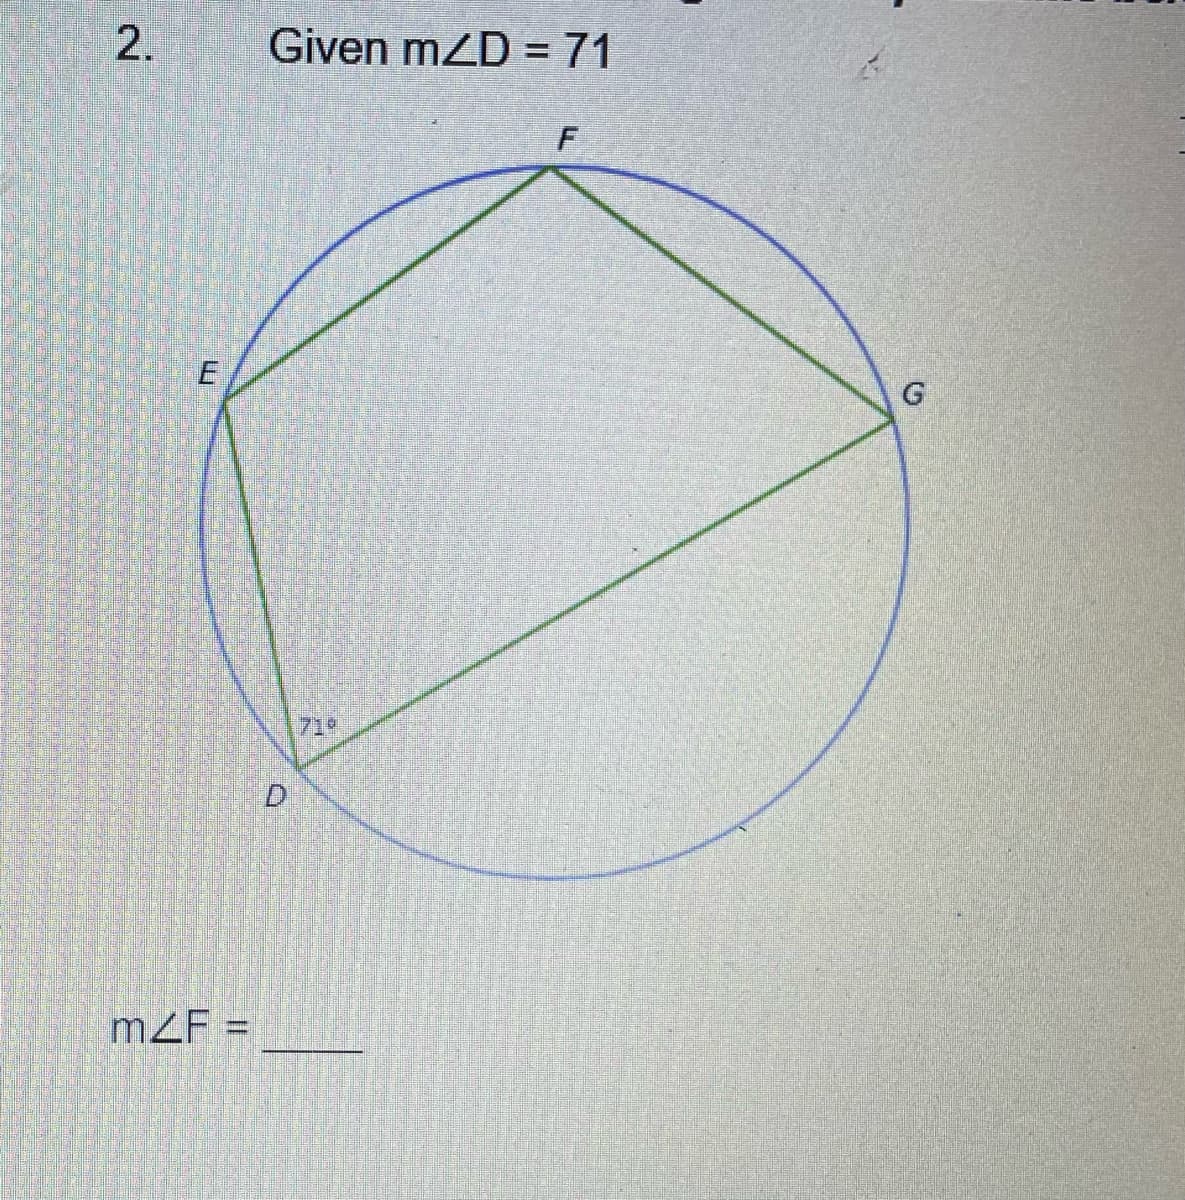 Given mZD = 71
E
719
mZF =
2.
